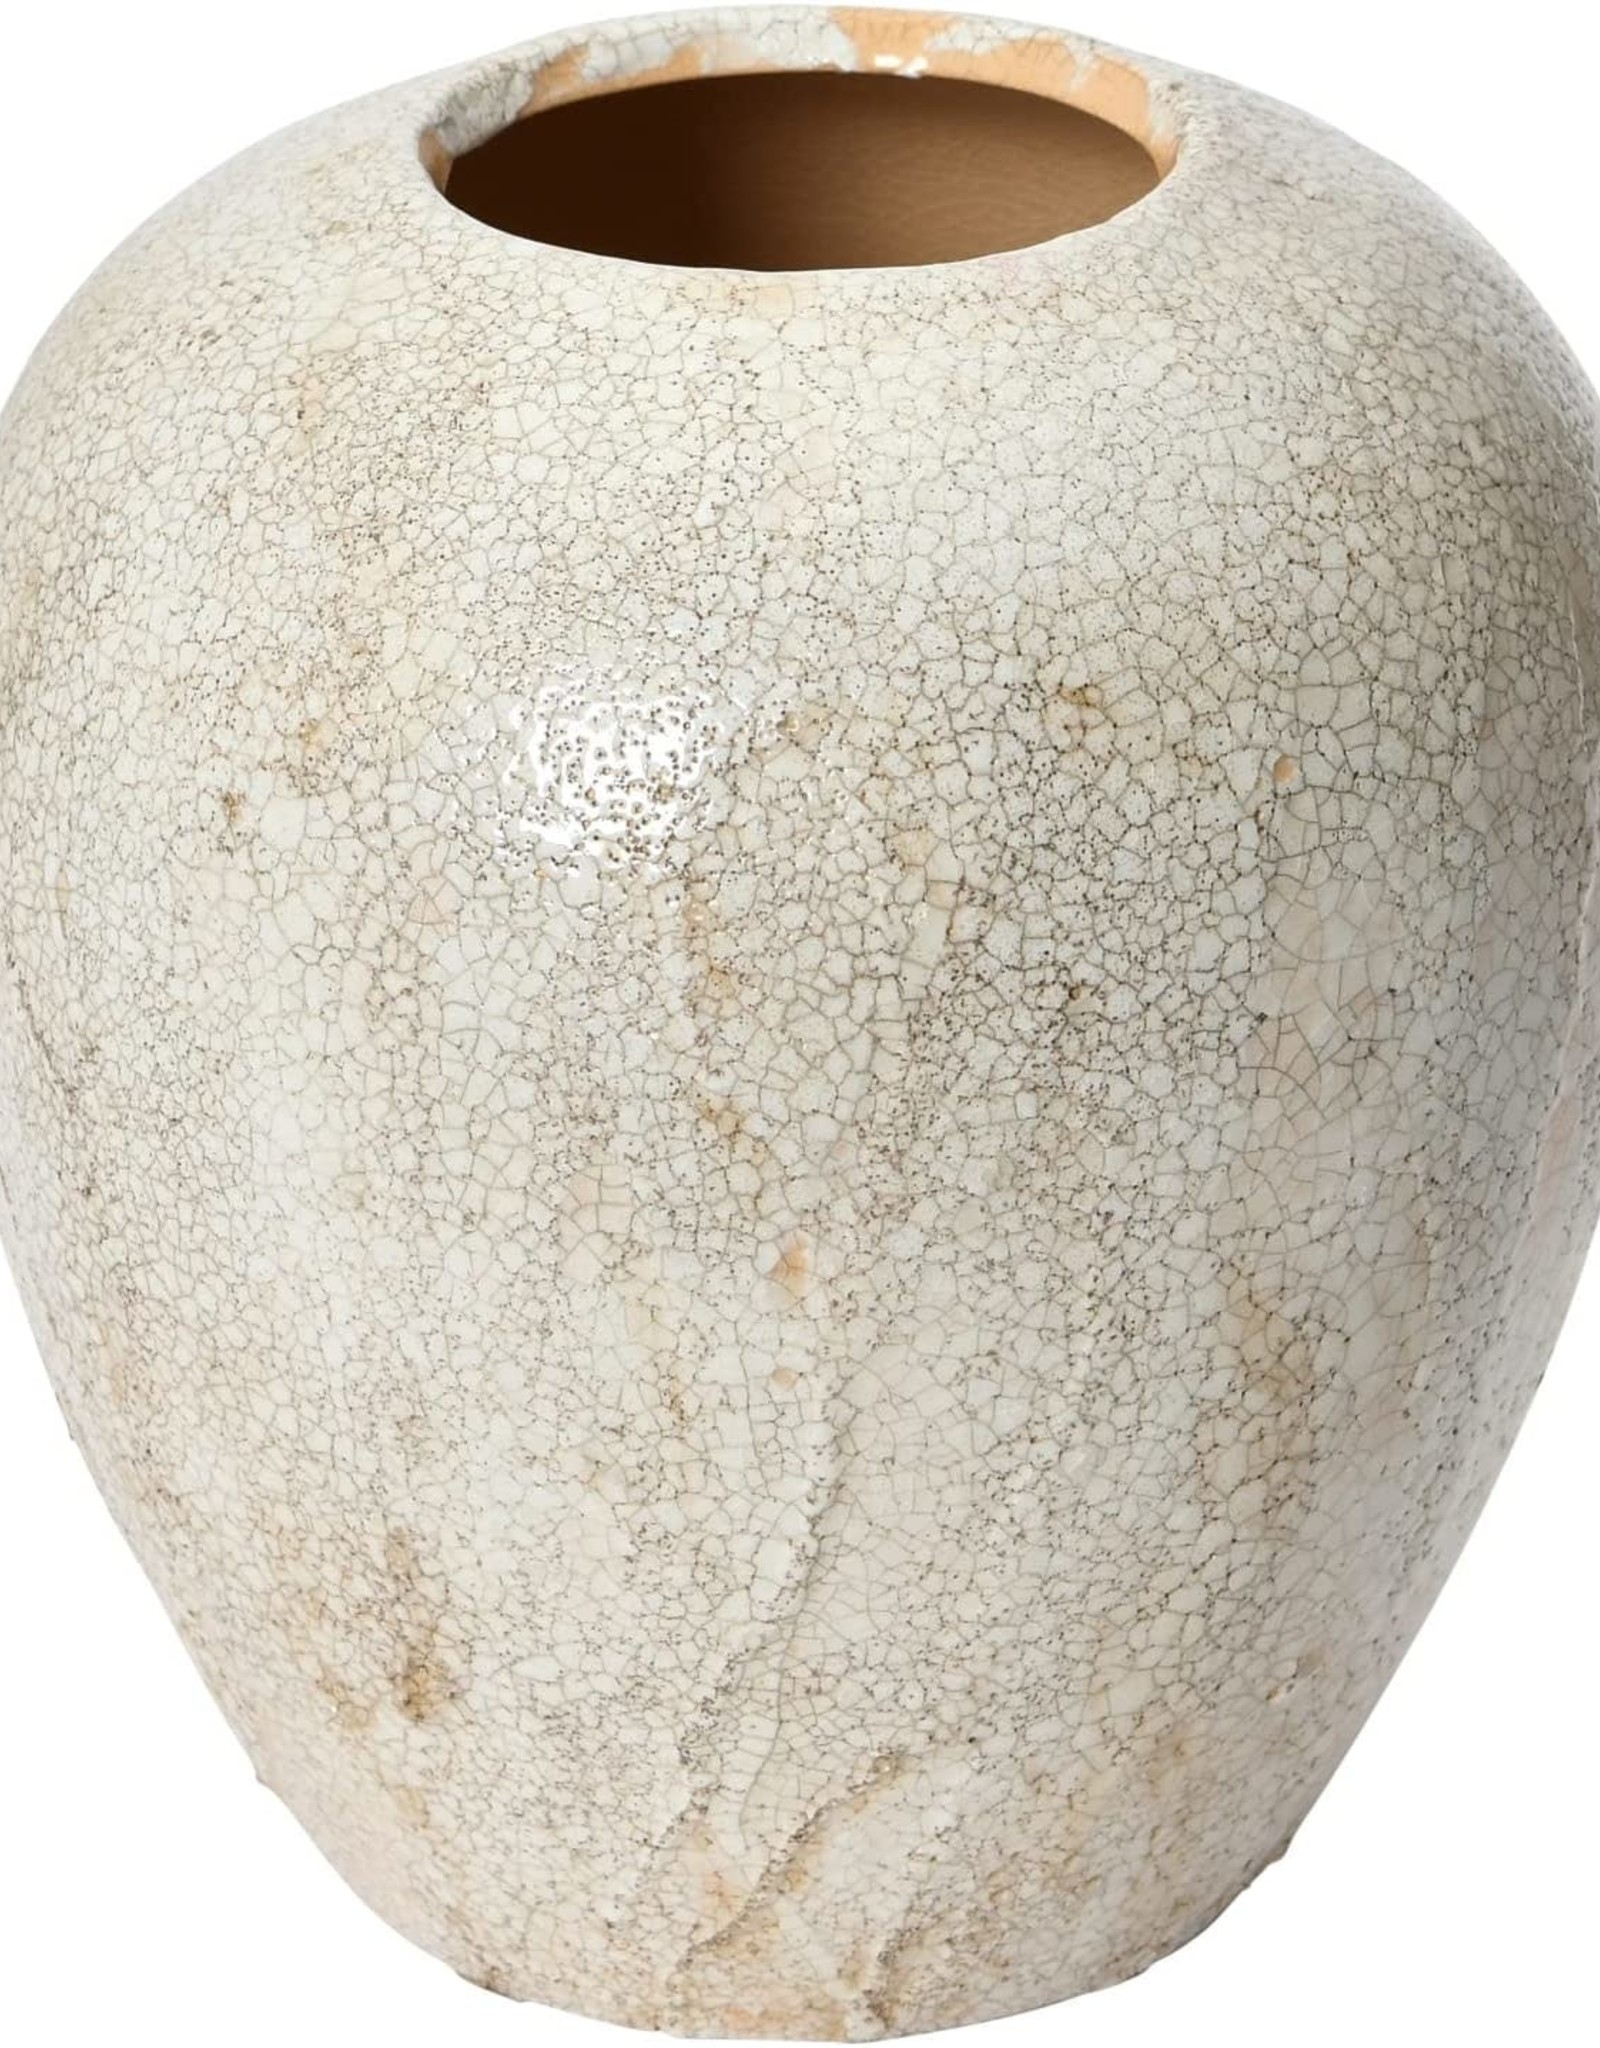 Stoneware Vase, Crackle Glaze, Distressed Cream